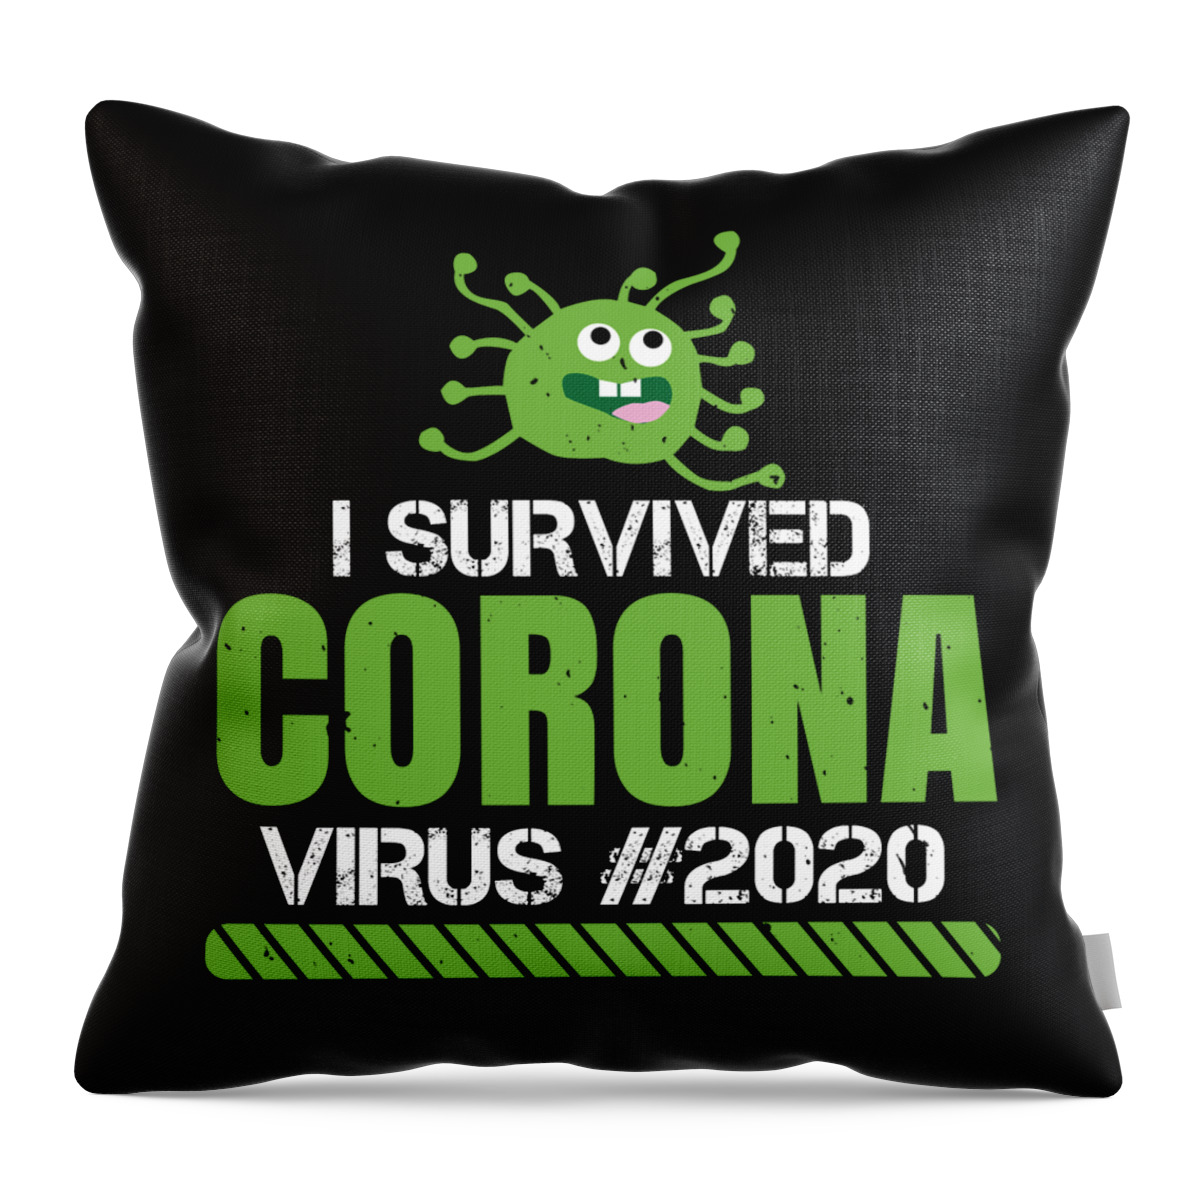 Sarcastic Throw Pillow featuring the digital art I survived coronavirus 2020 by Jacob Zelazny